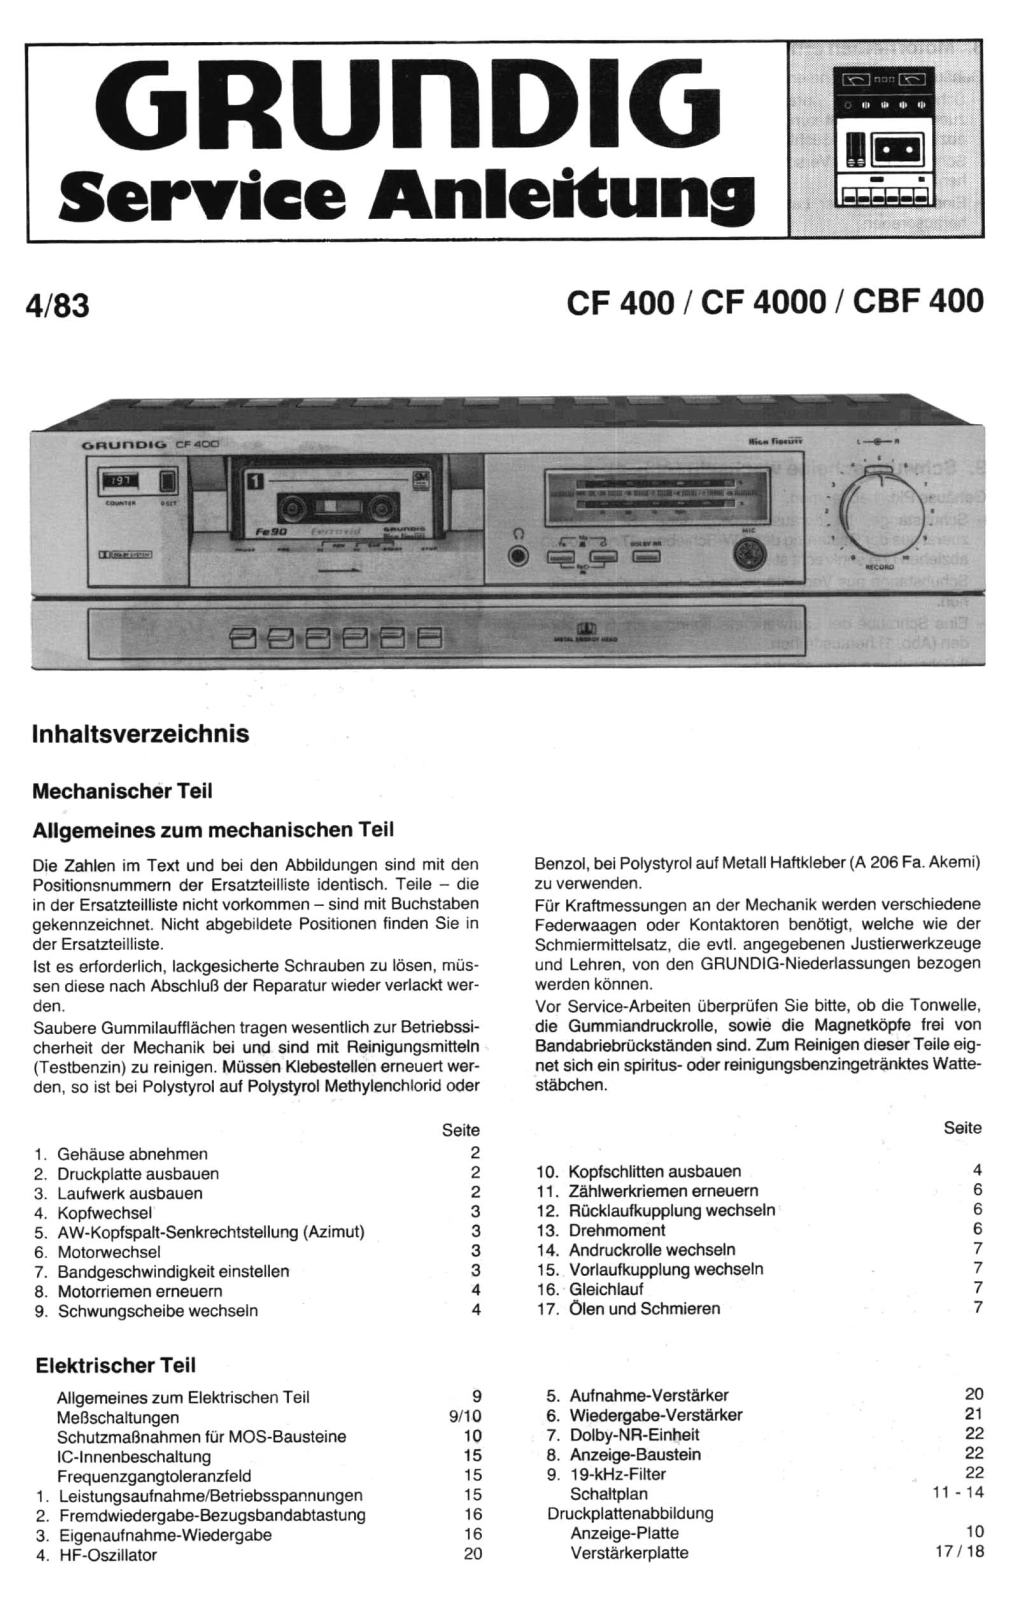 Grundig CF-400 Service Manual